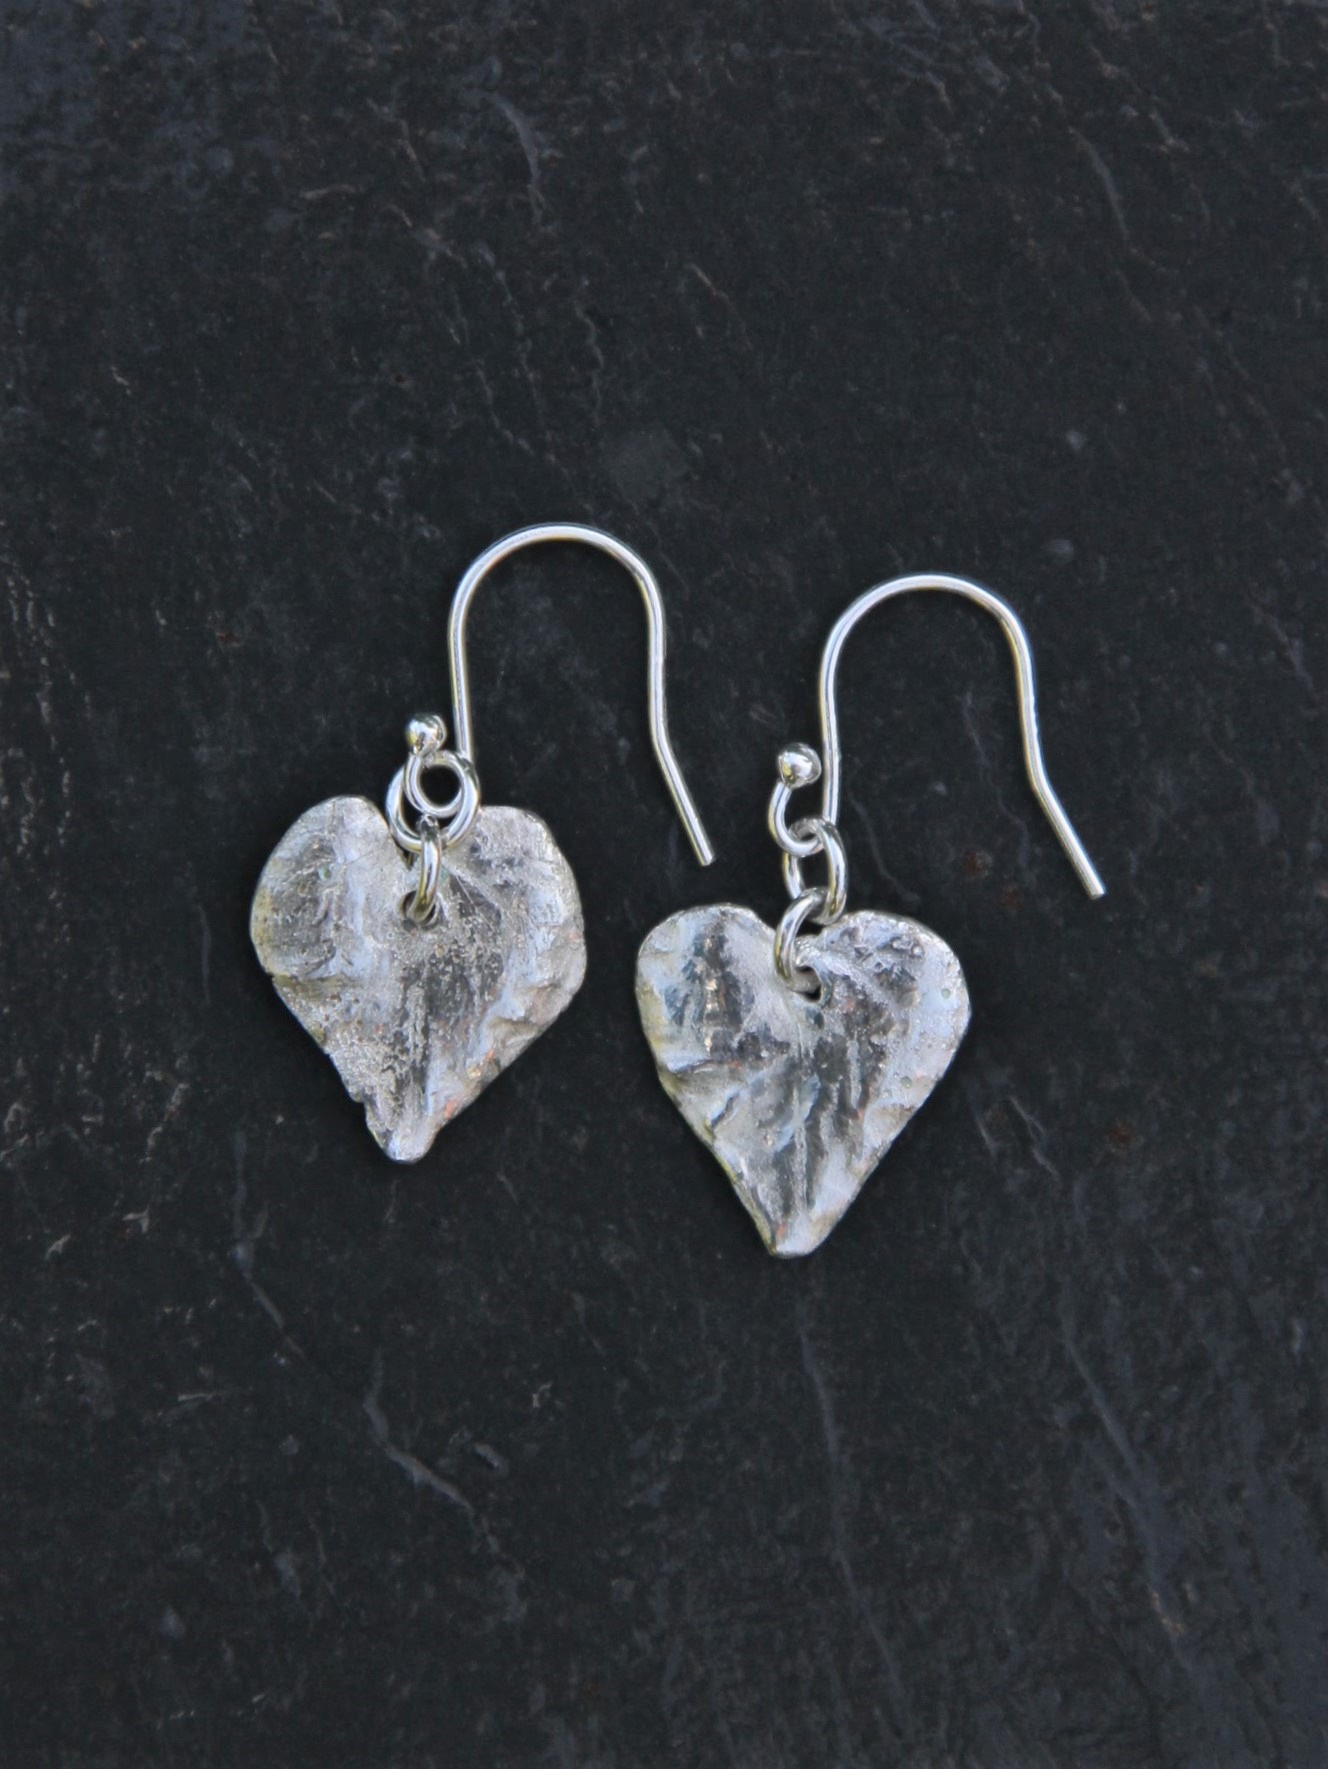 Amazon.com: Silver Heart Earrings Heart Shaped Stud Earrings 925 Sterling  Silver Earrings for Women Valentine's Day Fashion Chunky Heart Jewelry :  Handmade Products